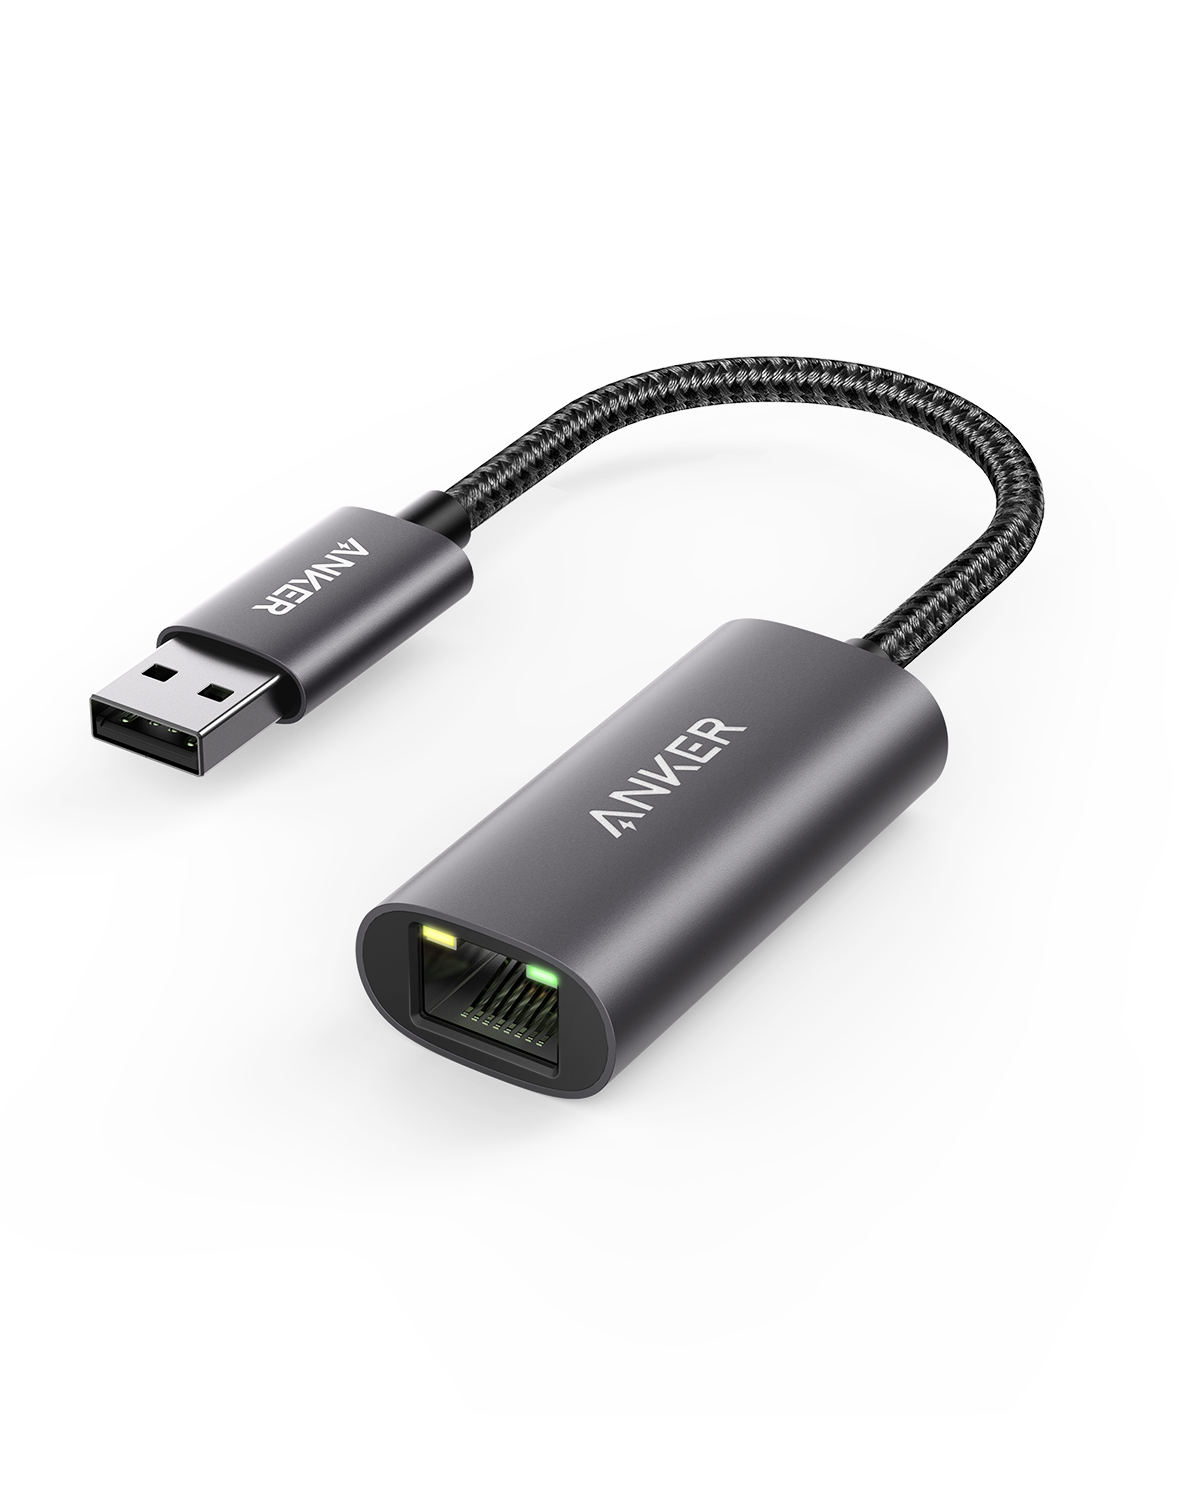 USB-C to Gigabit Ethernet Network Adapter Mac & PC Compatible - Black